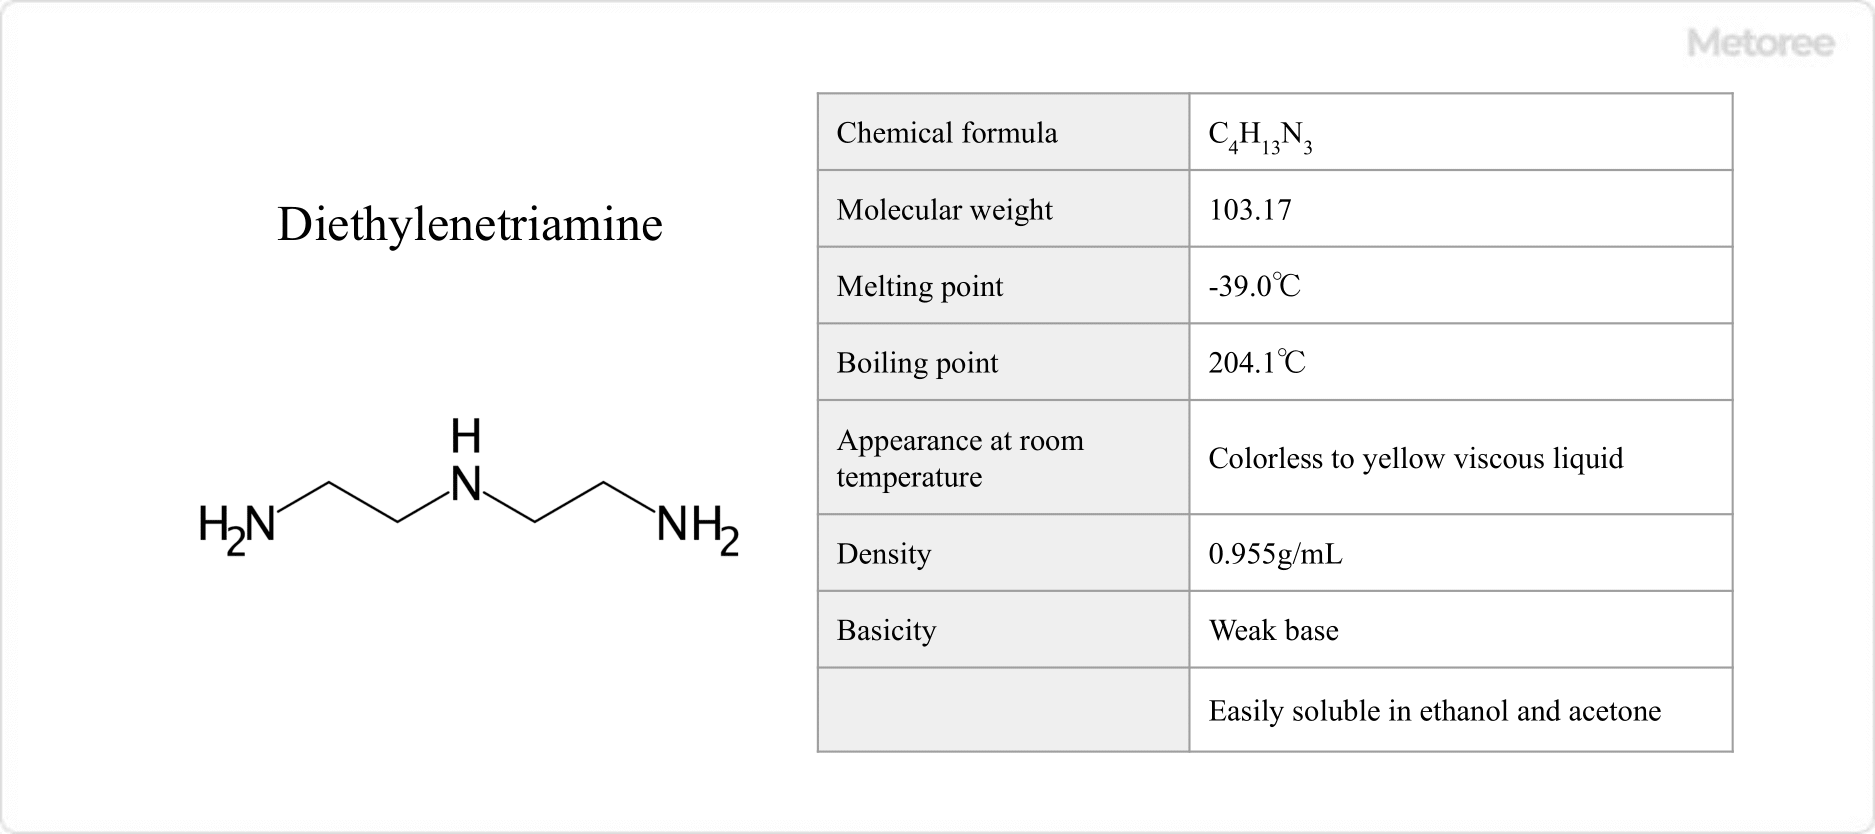 Basic Information on Diethylenetriamine